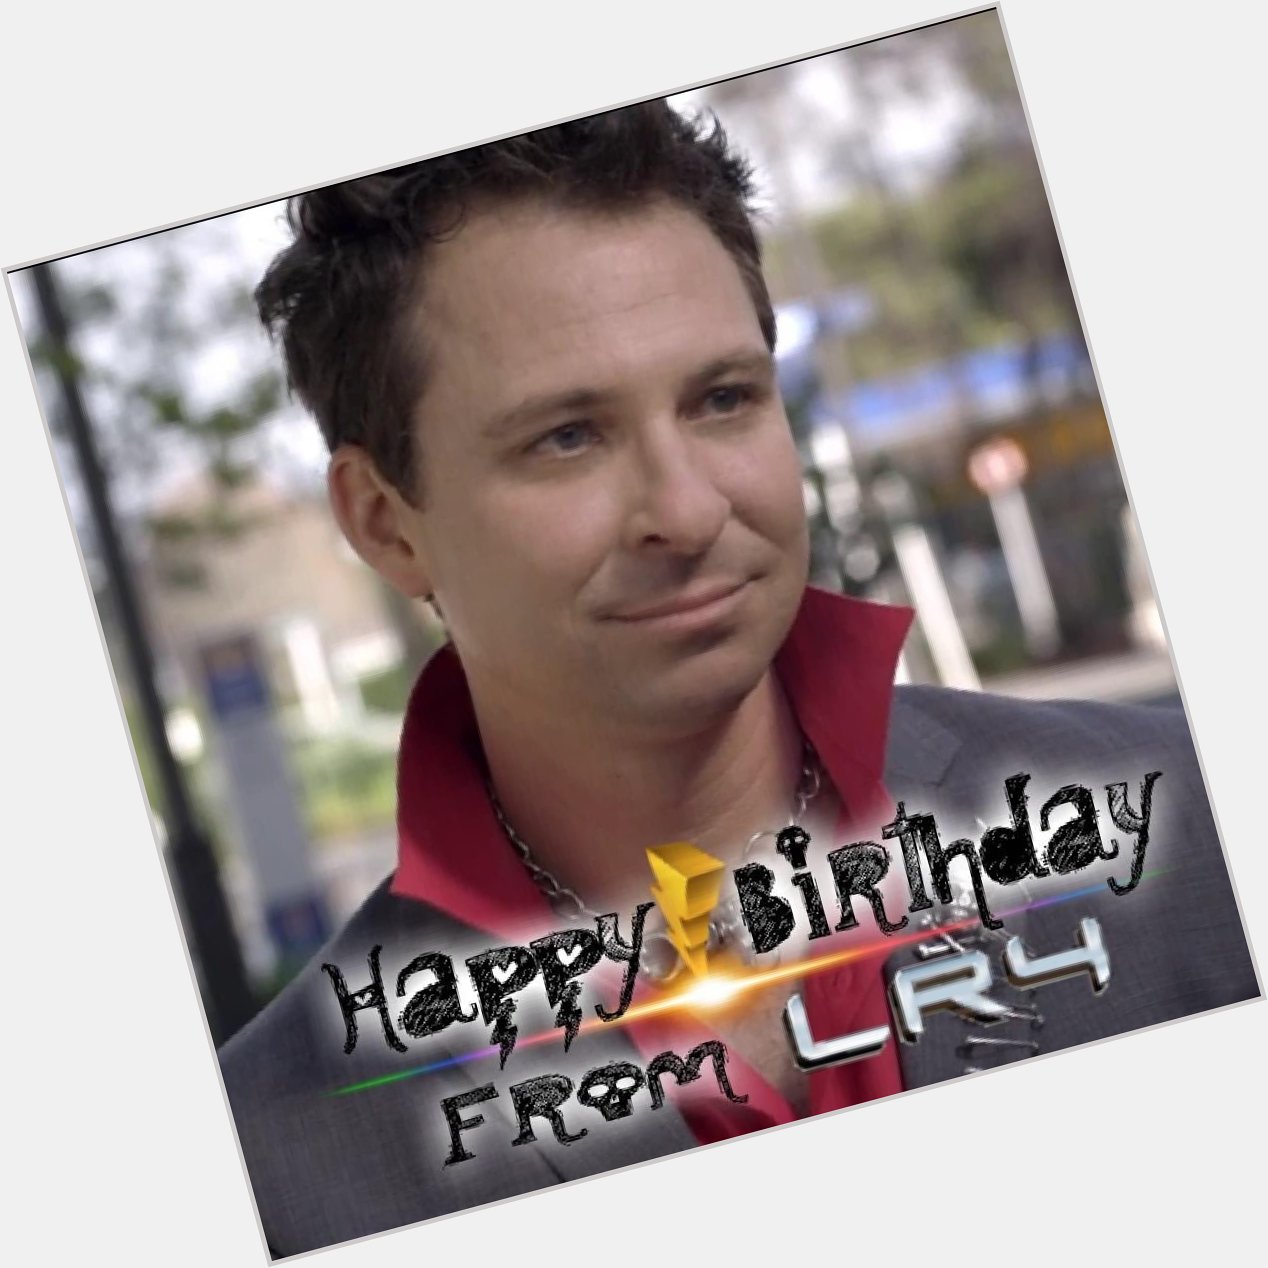 LR4 would like to wish Jason Narvy a Happy Birthday! 